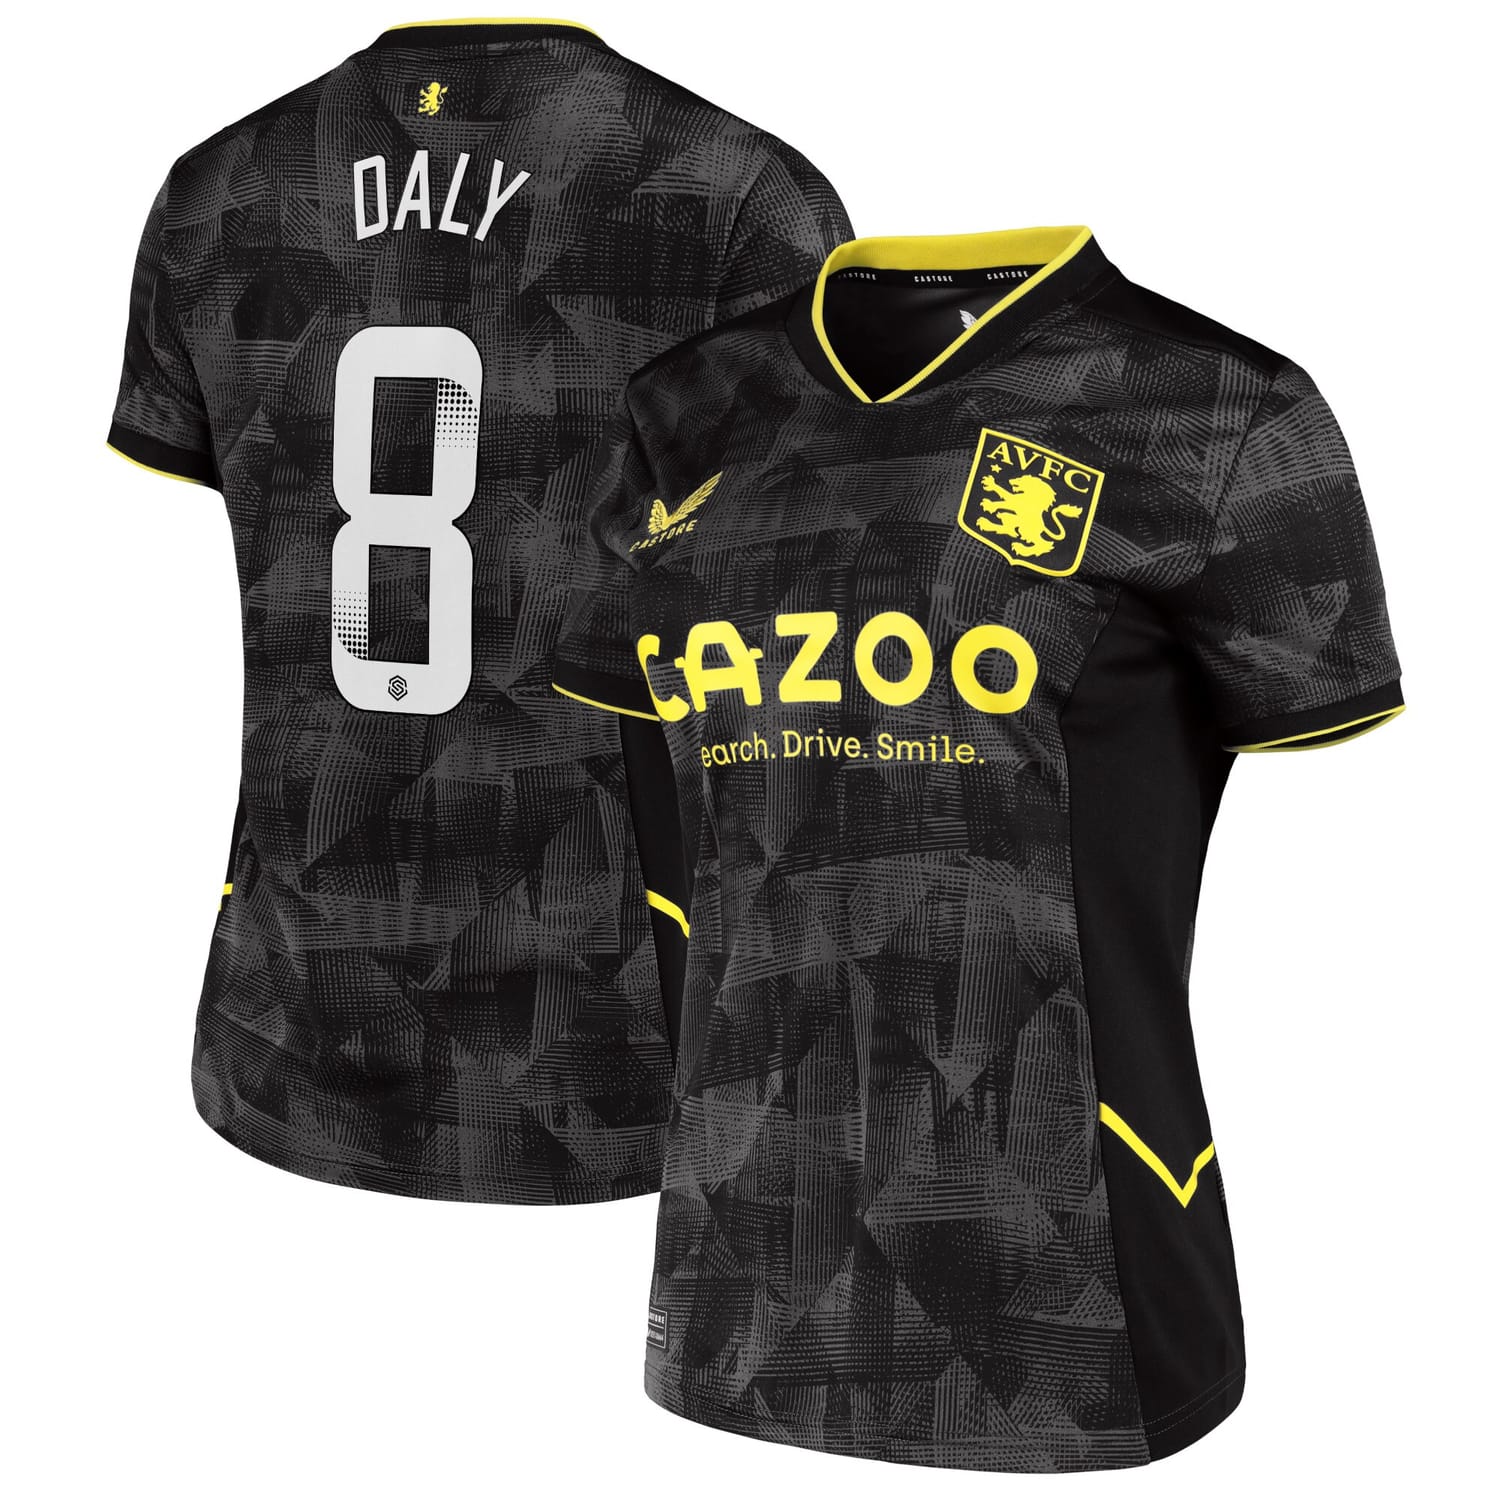 Premier League Aston Villa Third WSL Jersey Shirt 2022-23 player Rachel Daly 8 printing for Women